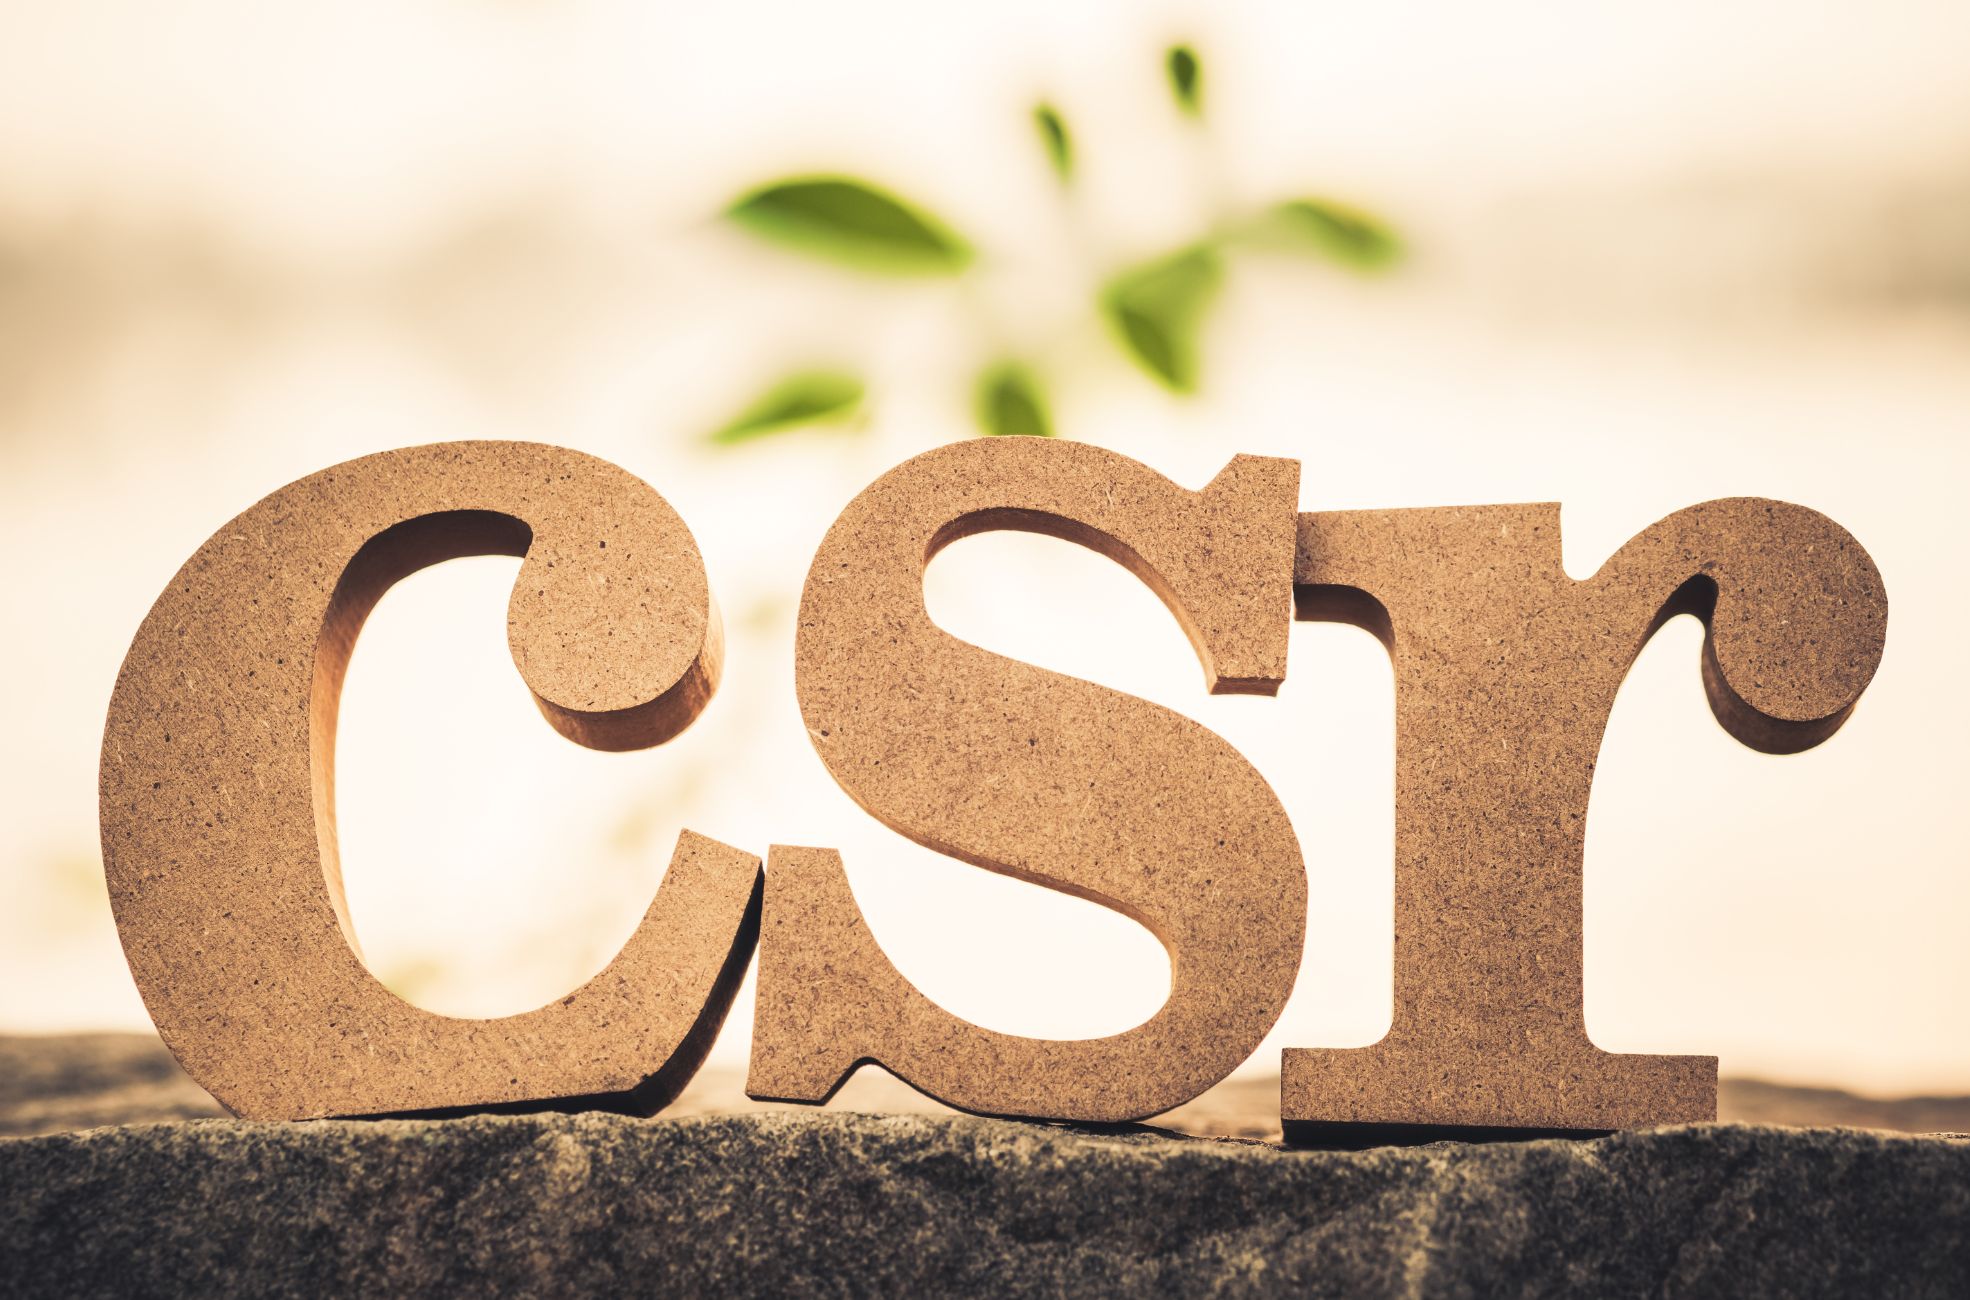 CSR Written With Wooden Blocks